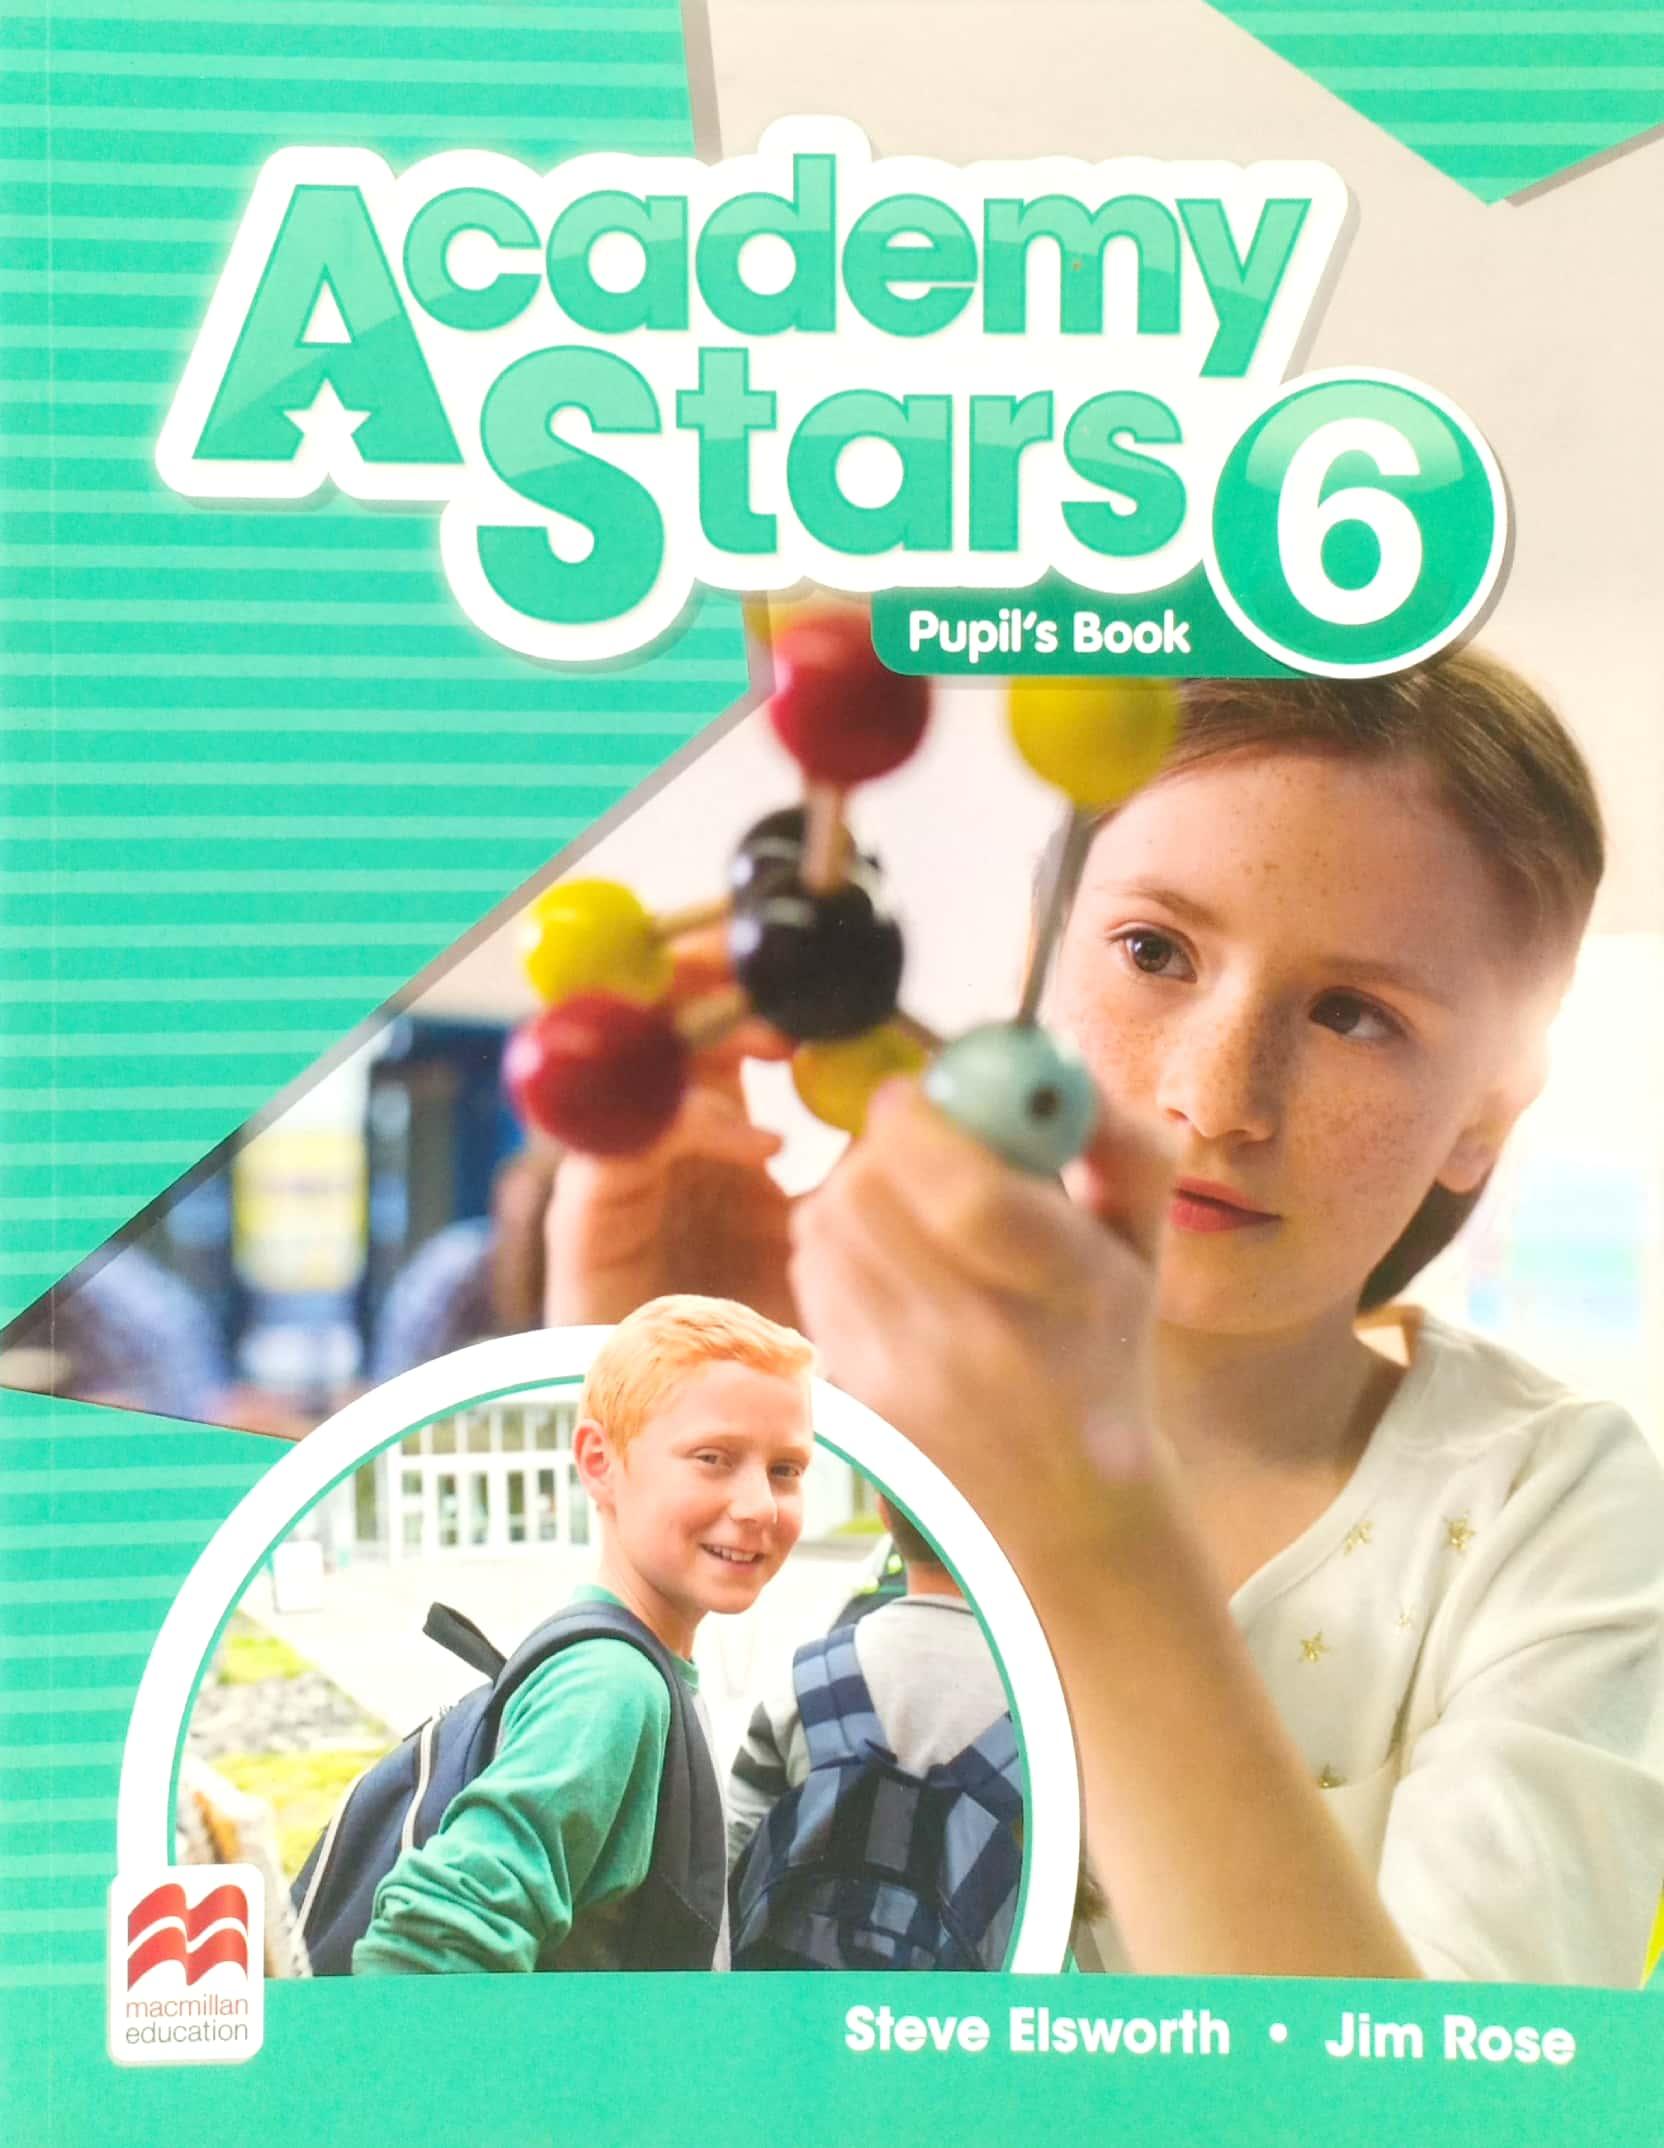 Academy Stars 6 PB Pk